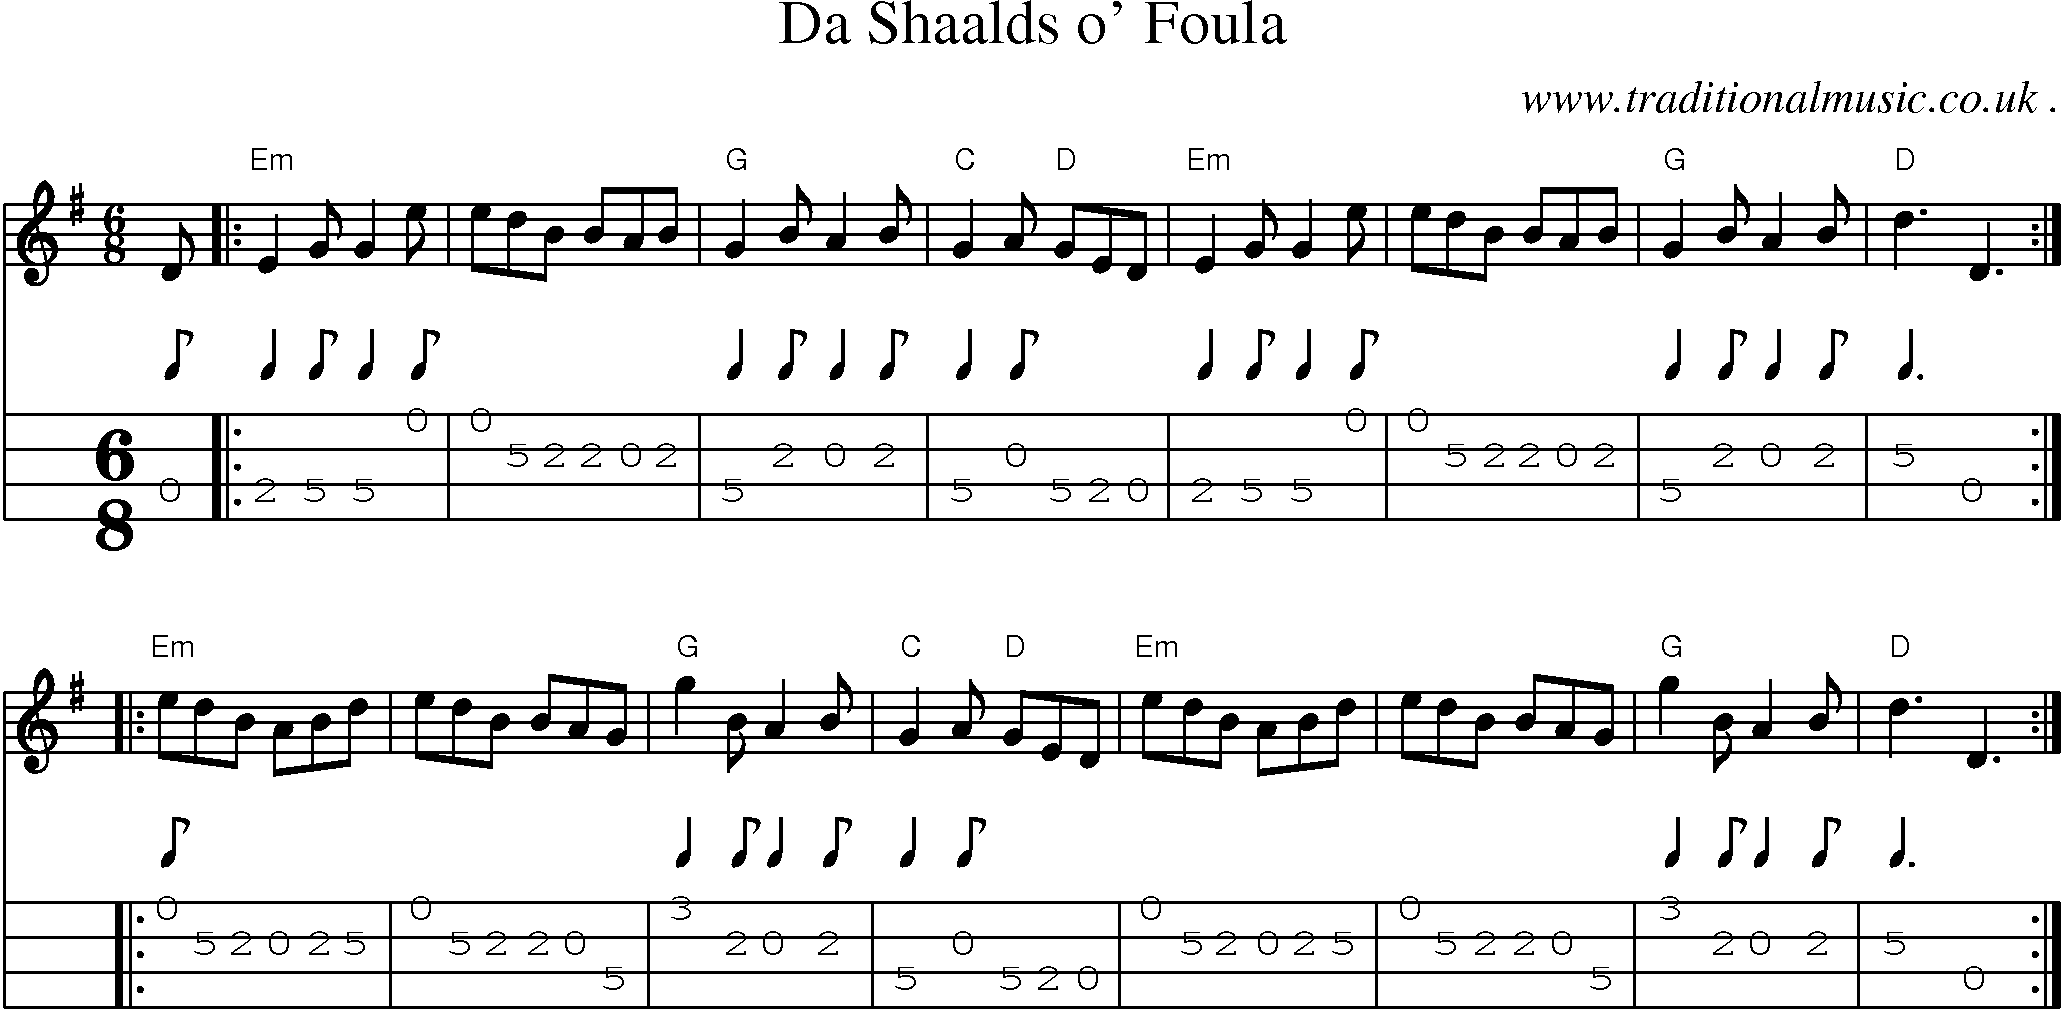 Sheet-music  score, Chords and Mandolin Tabs for Da Shaalds O Foula